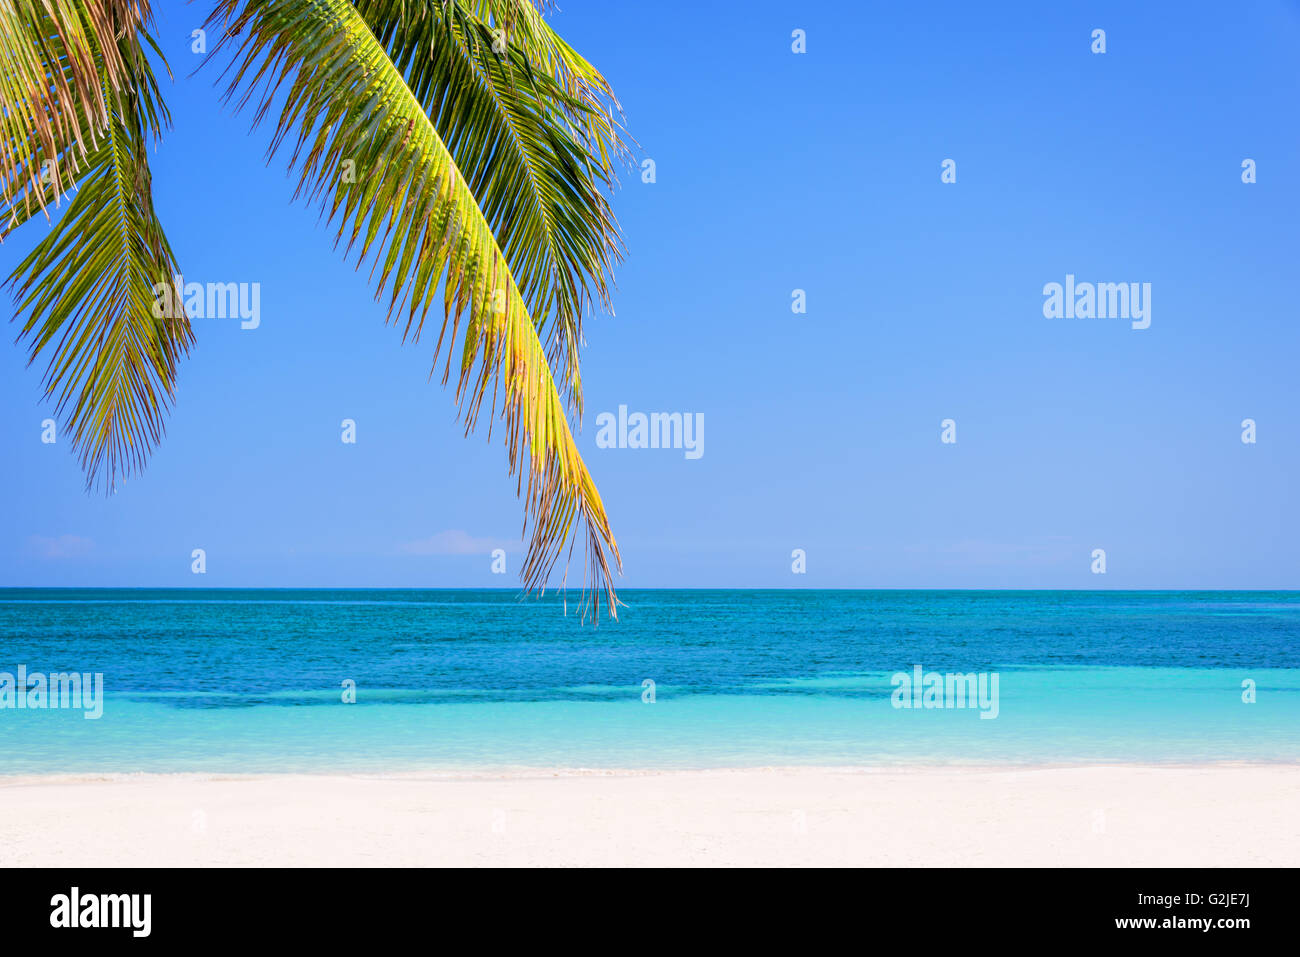 Beach with palm trees, caribbean sea Stock Photo